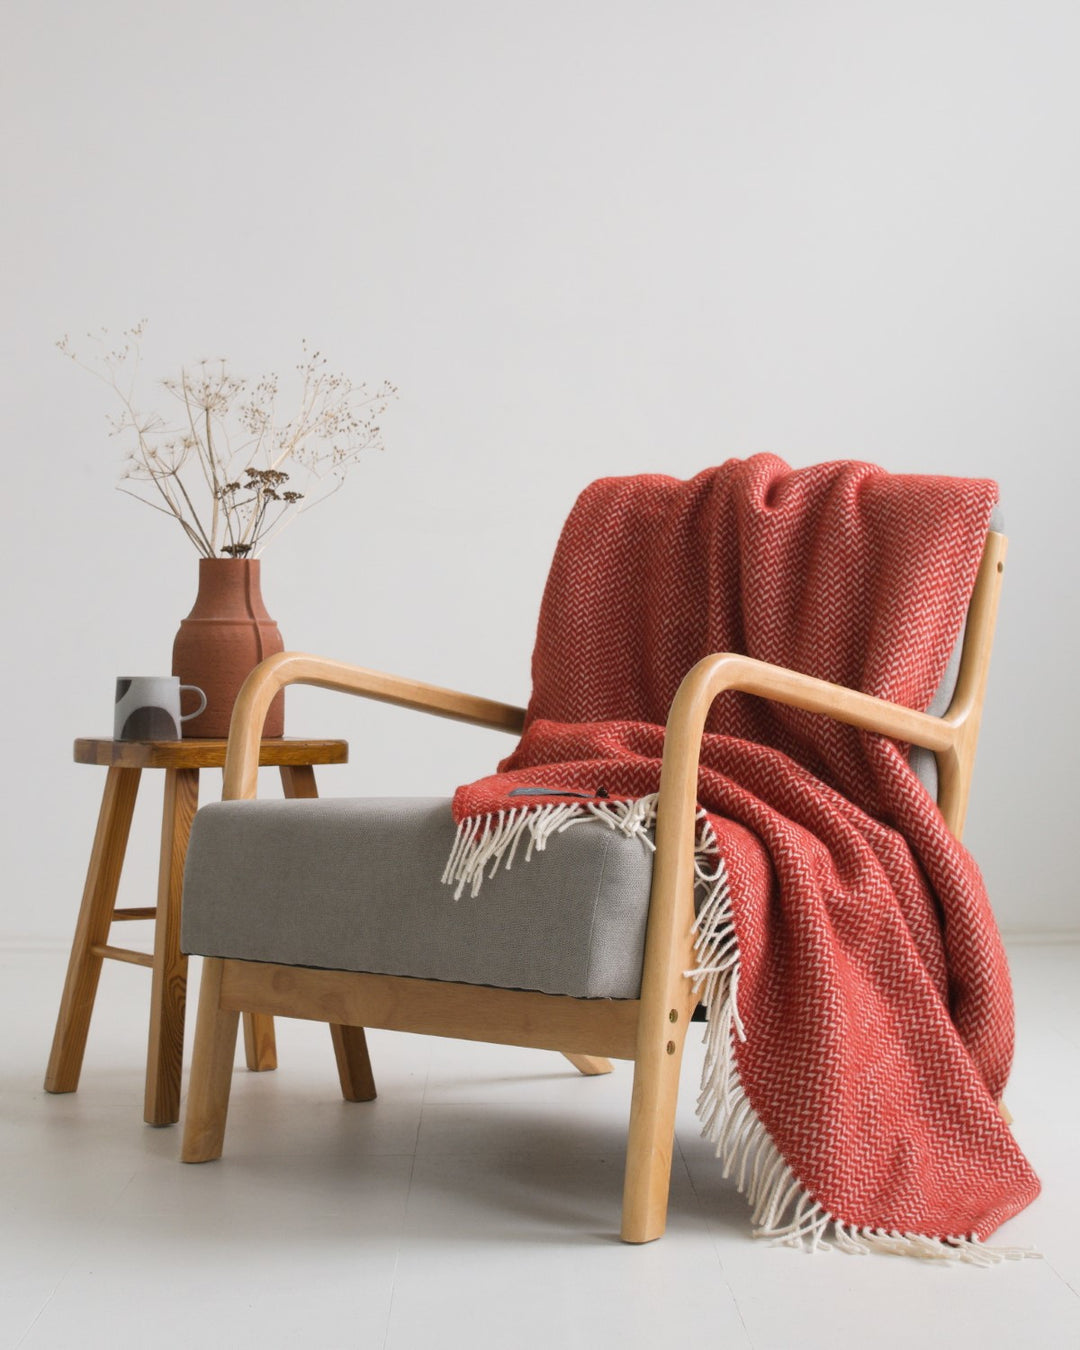 Large red herringbone wool blanket draped over a grey lounge chair